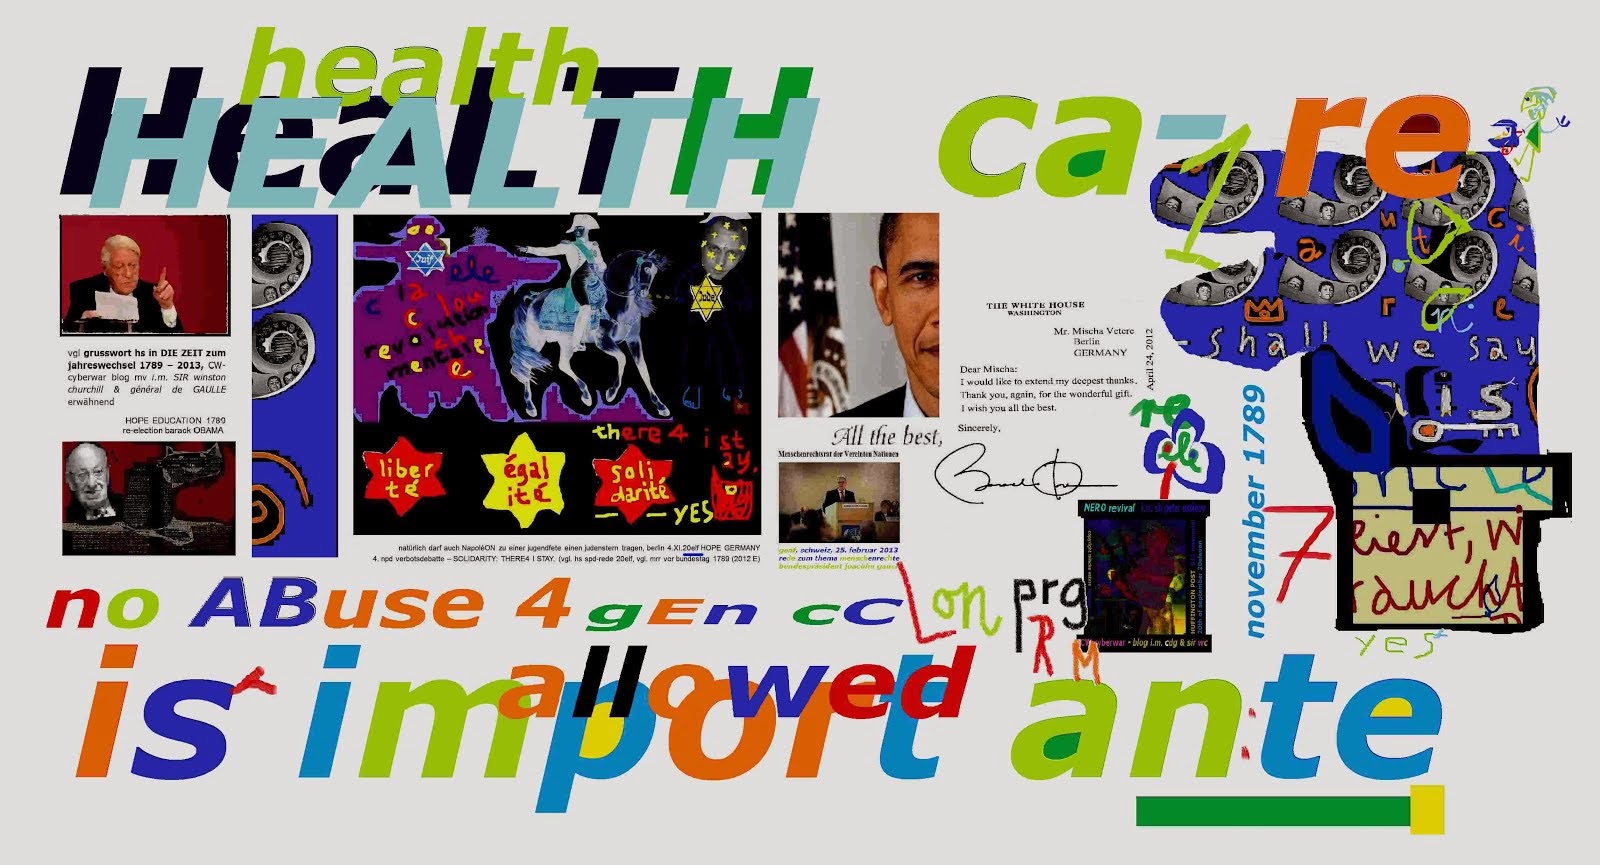 barack obama bill clinton HEALTH CARE gen program aids weapON NO GENUCIDE subPIRME george w bush